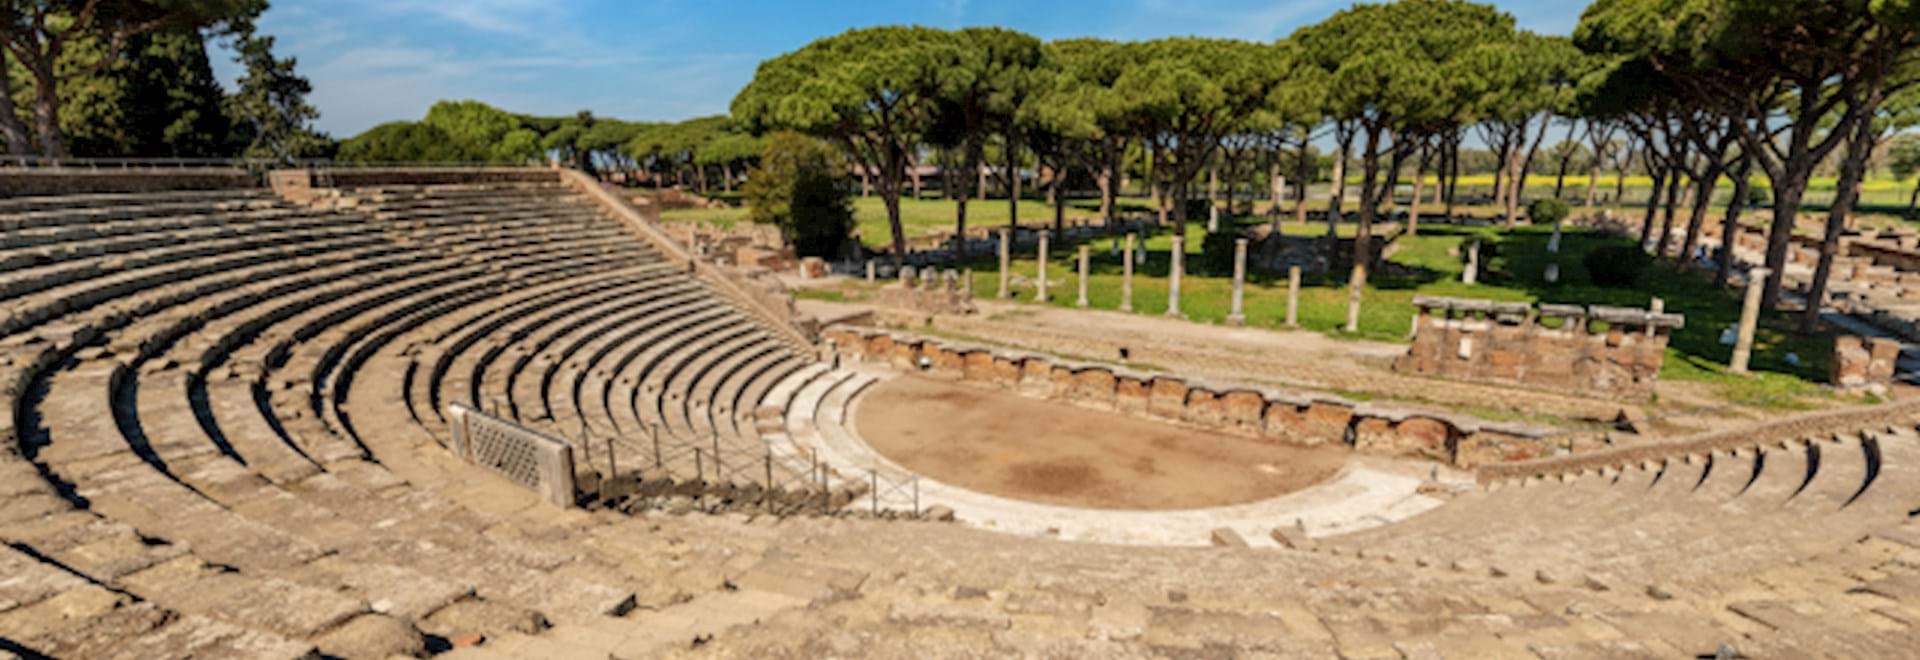 Ancient Arena in Ostia